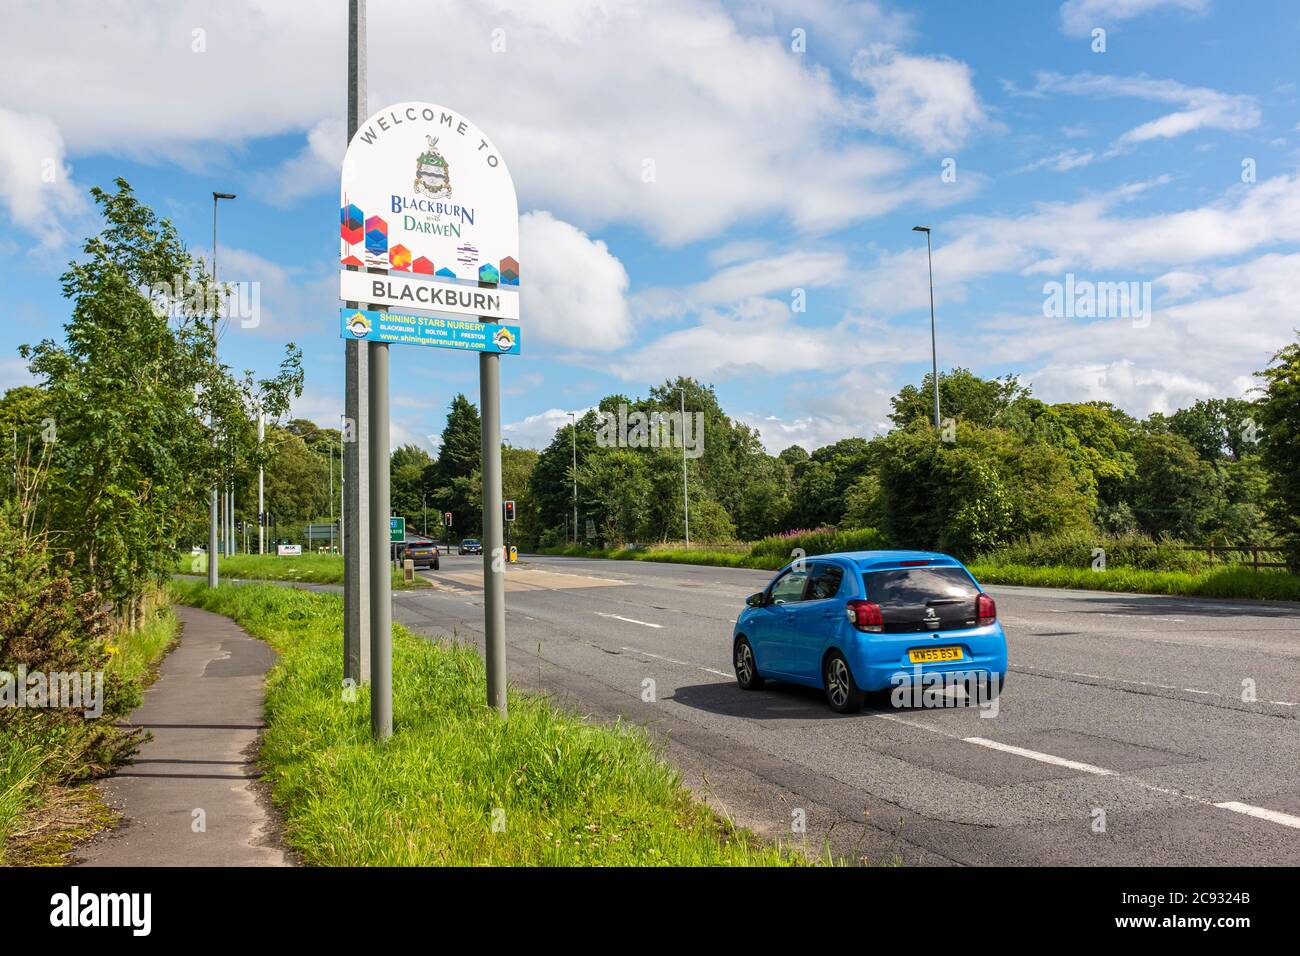 Welcome to Blackburn sign on Preston New Road entrance to Blackburn, Lancashire, UK. Stock Photo